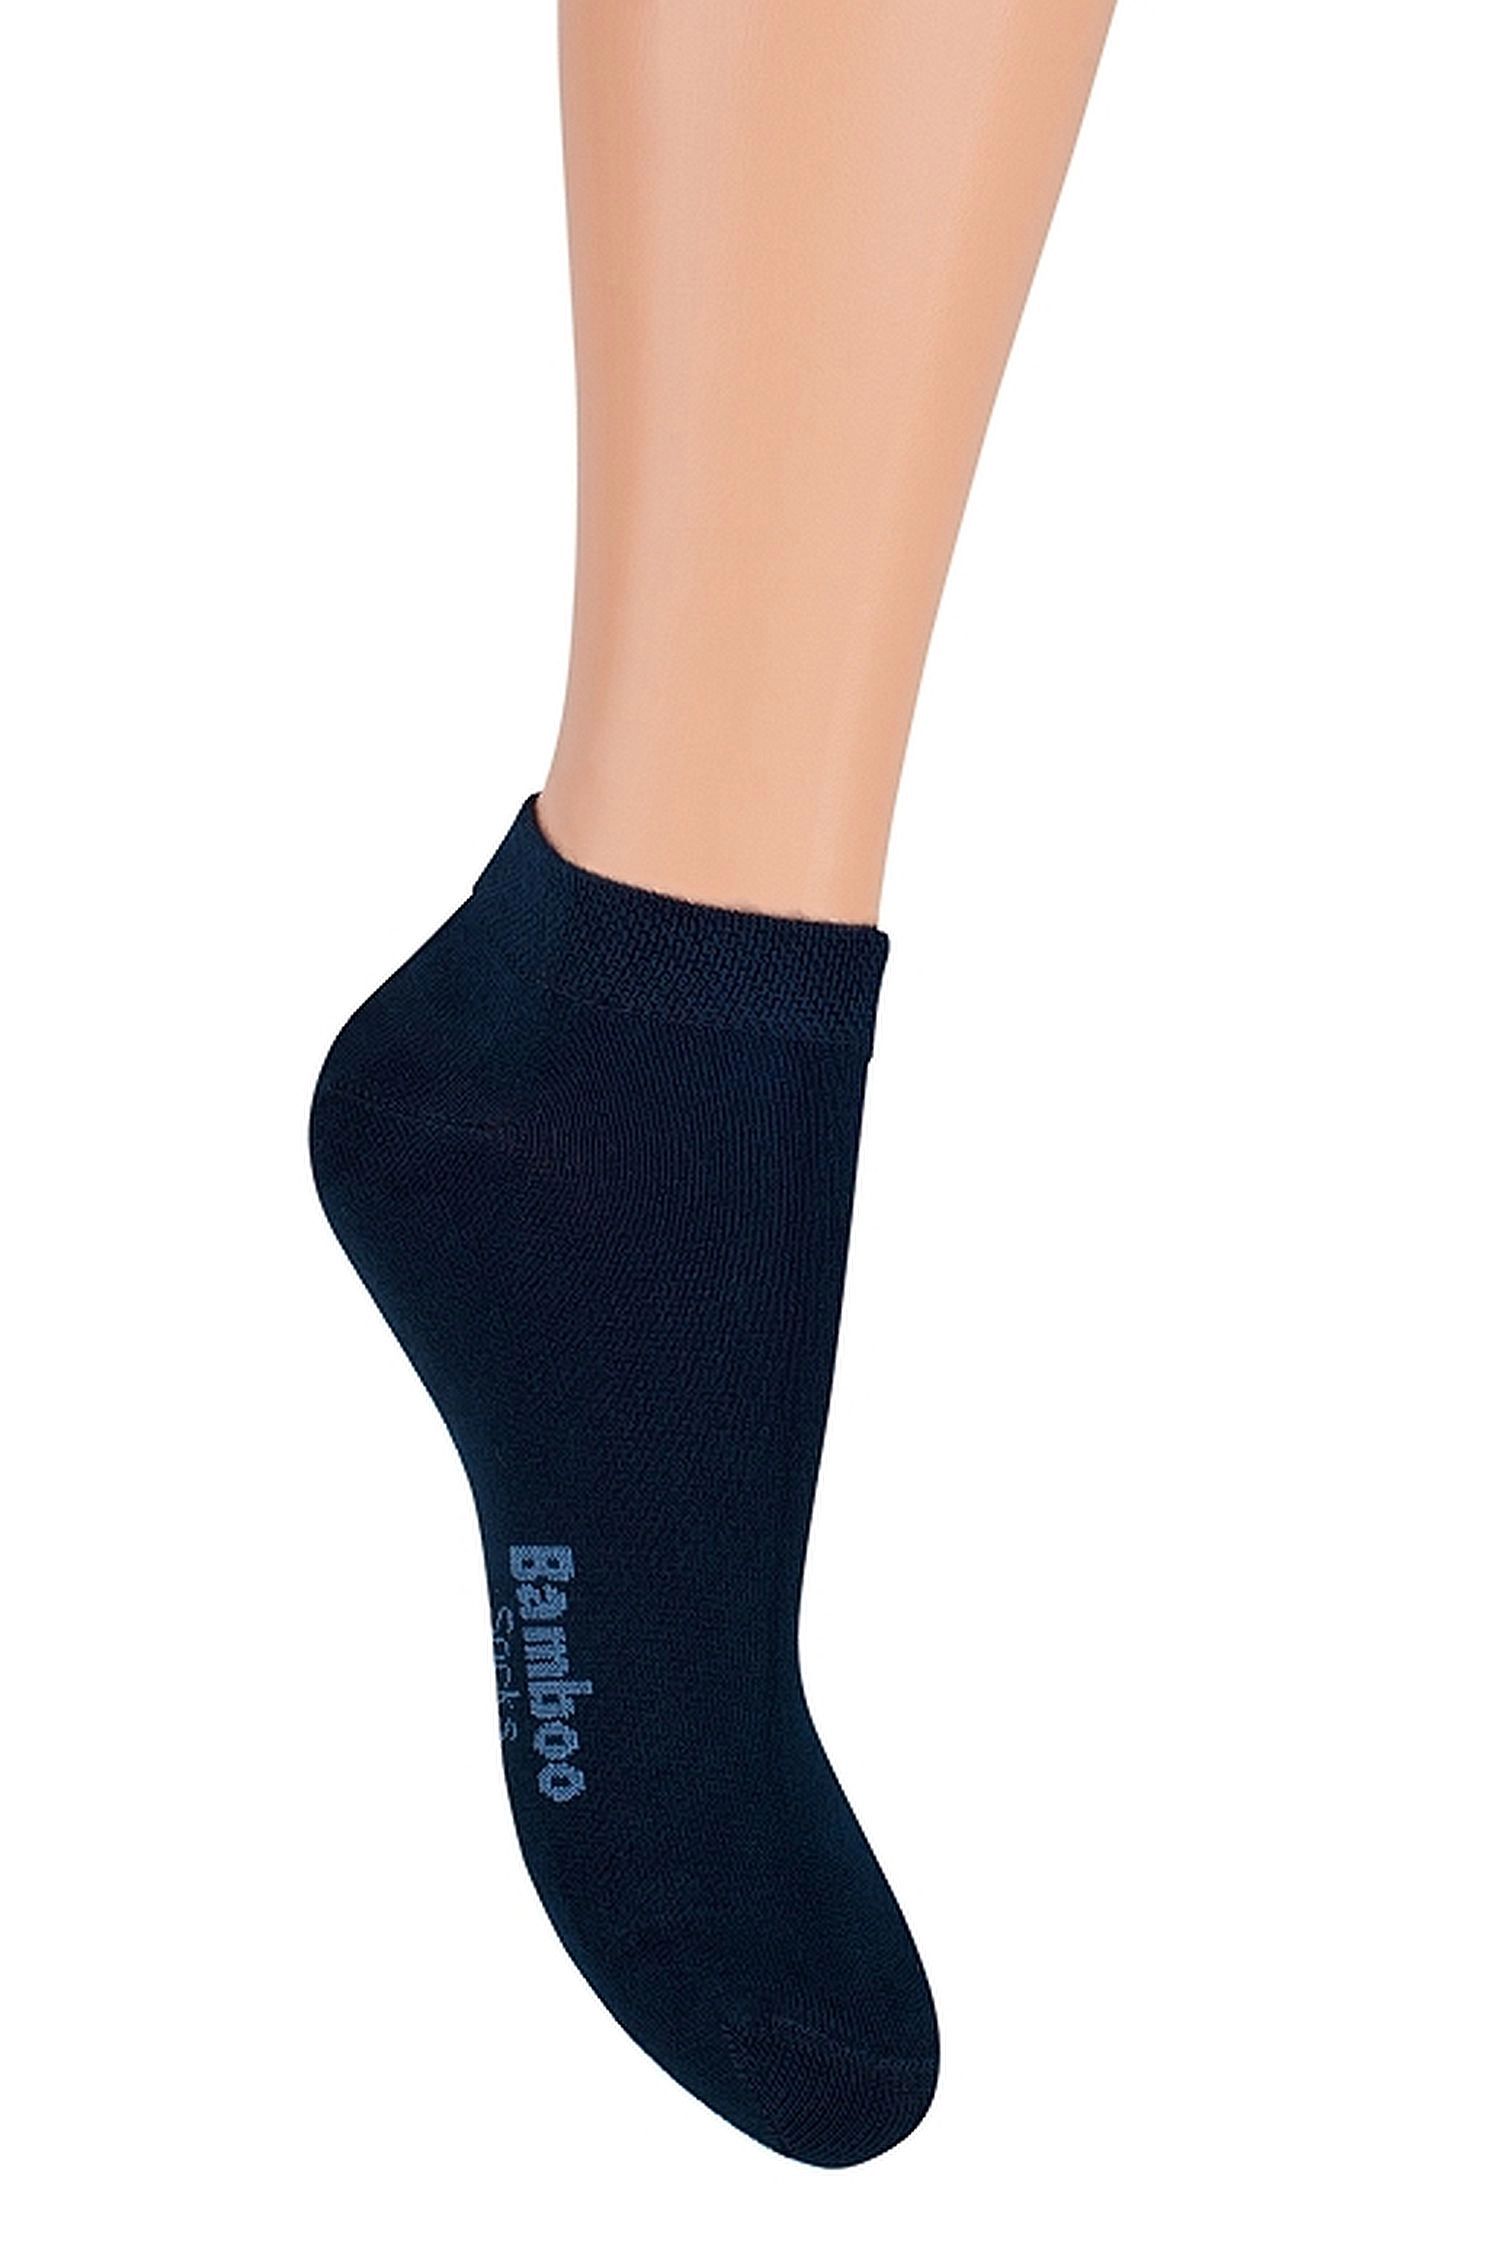 E-shop Dámske ponožky 25 dark blue